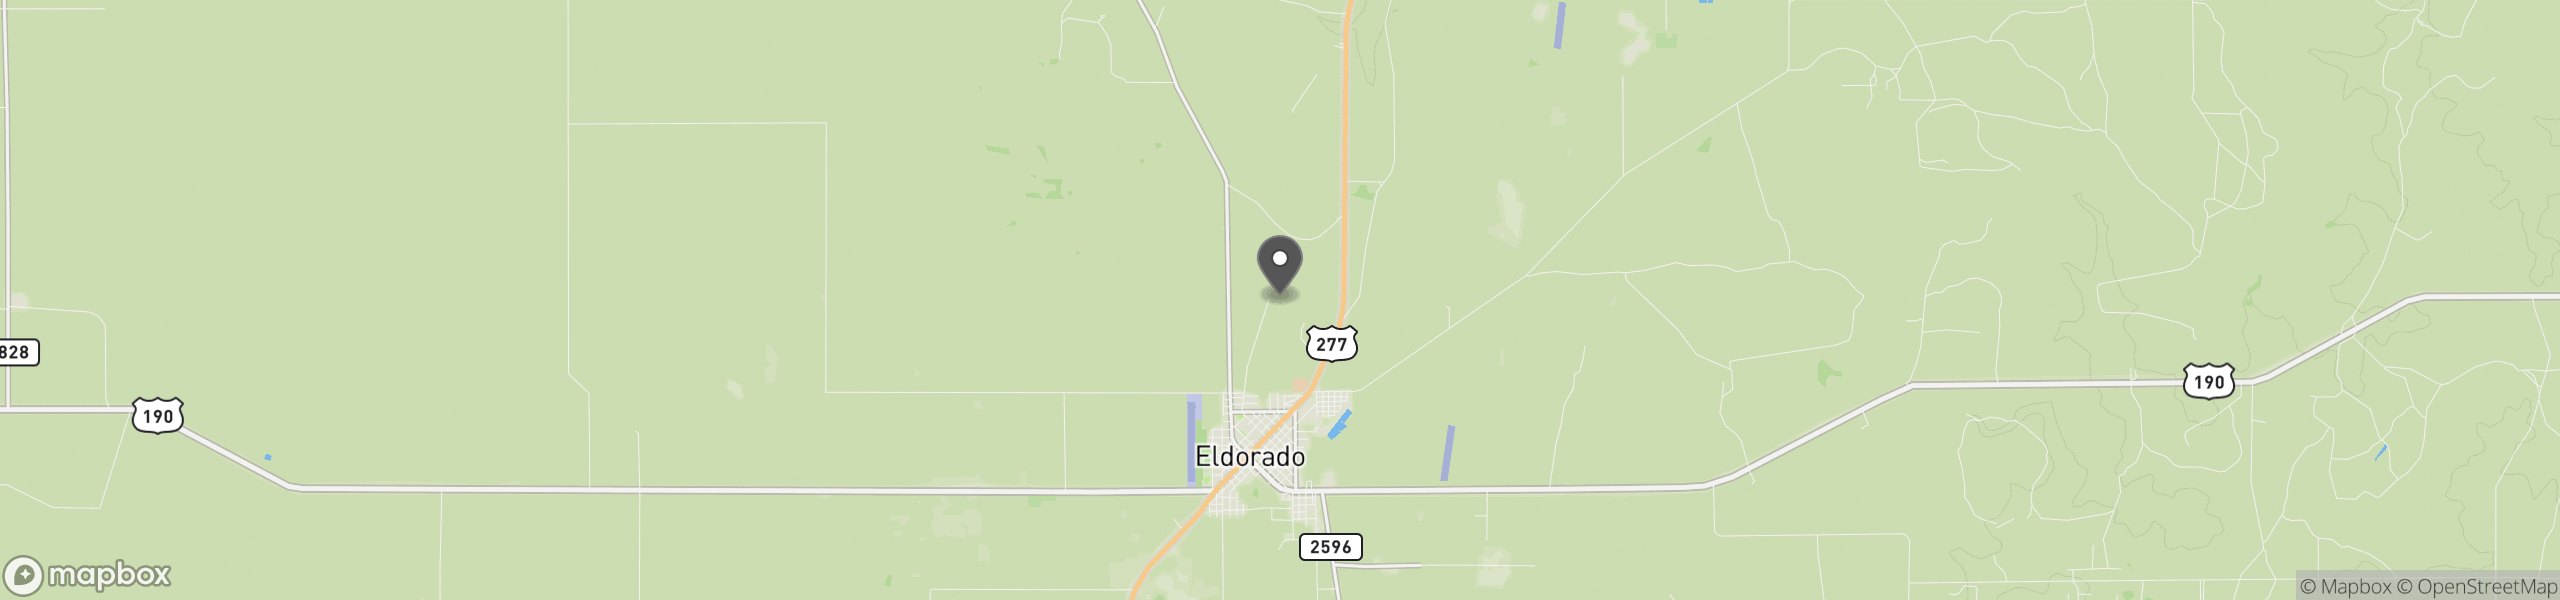 Eldorado, TX 76936